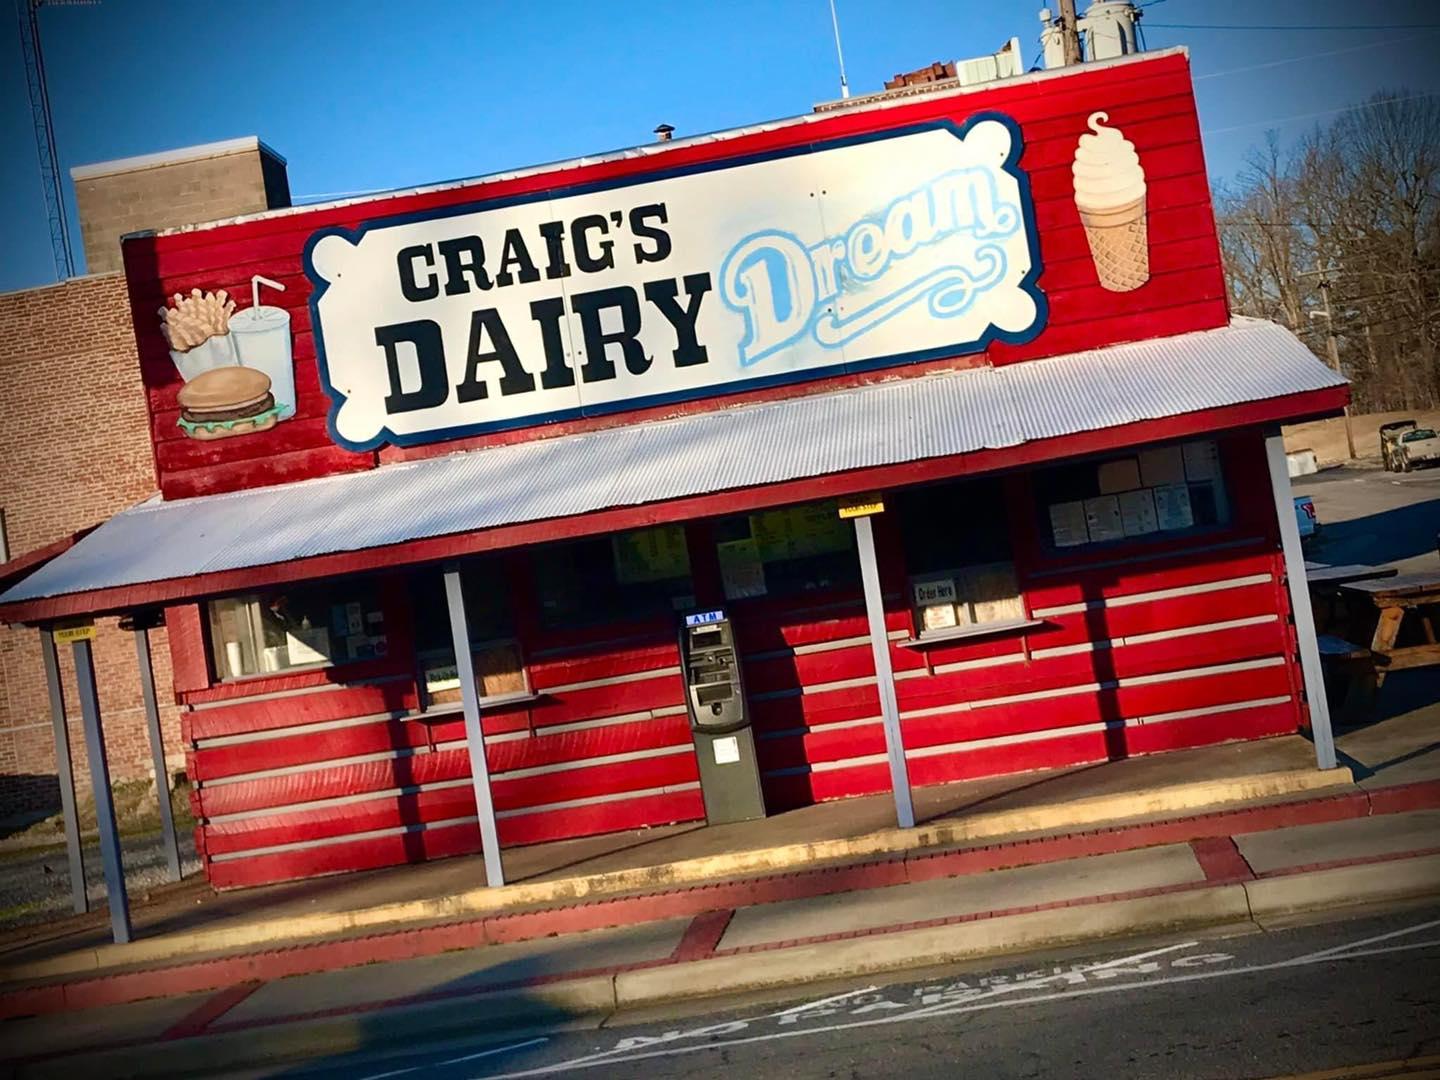 Pet Friendly Craig's Dairy Dream